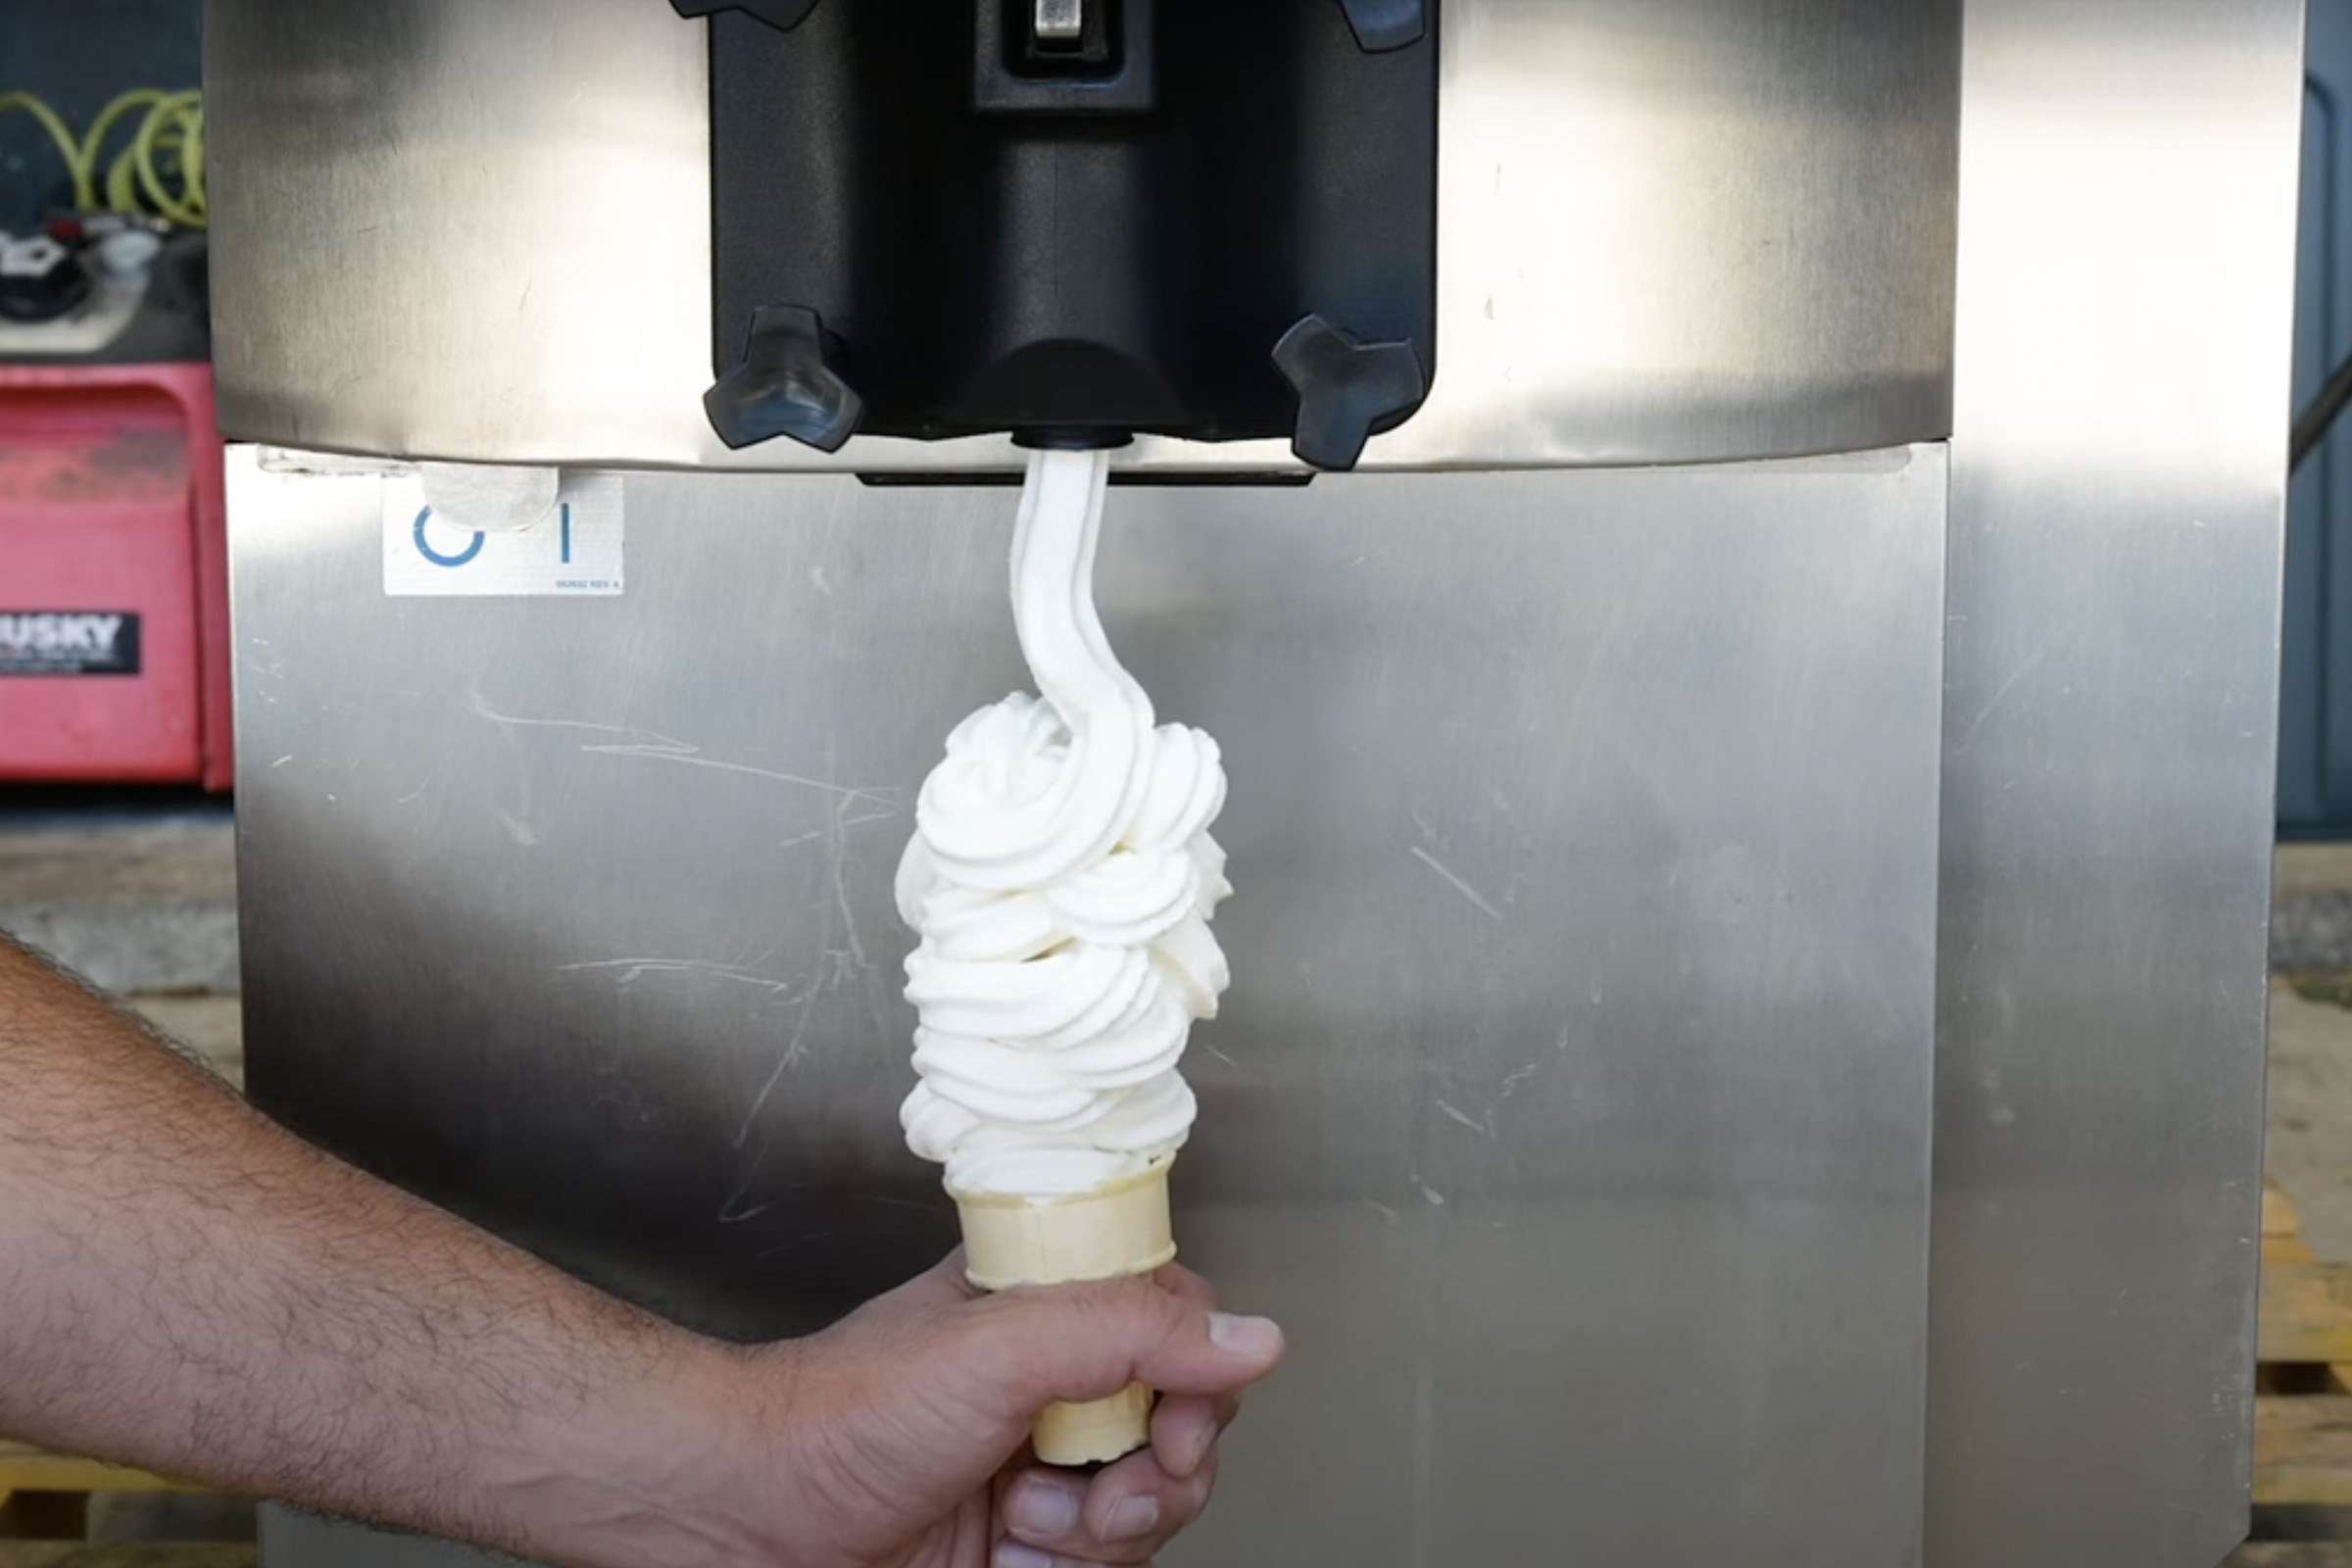 An image showing McDonald’s ice cream machine